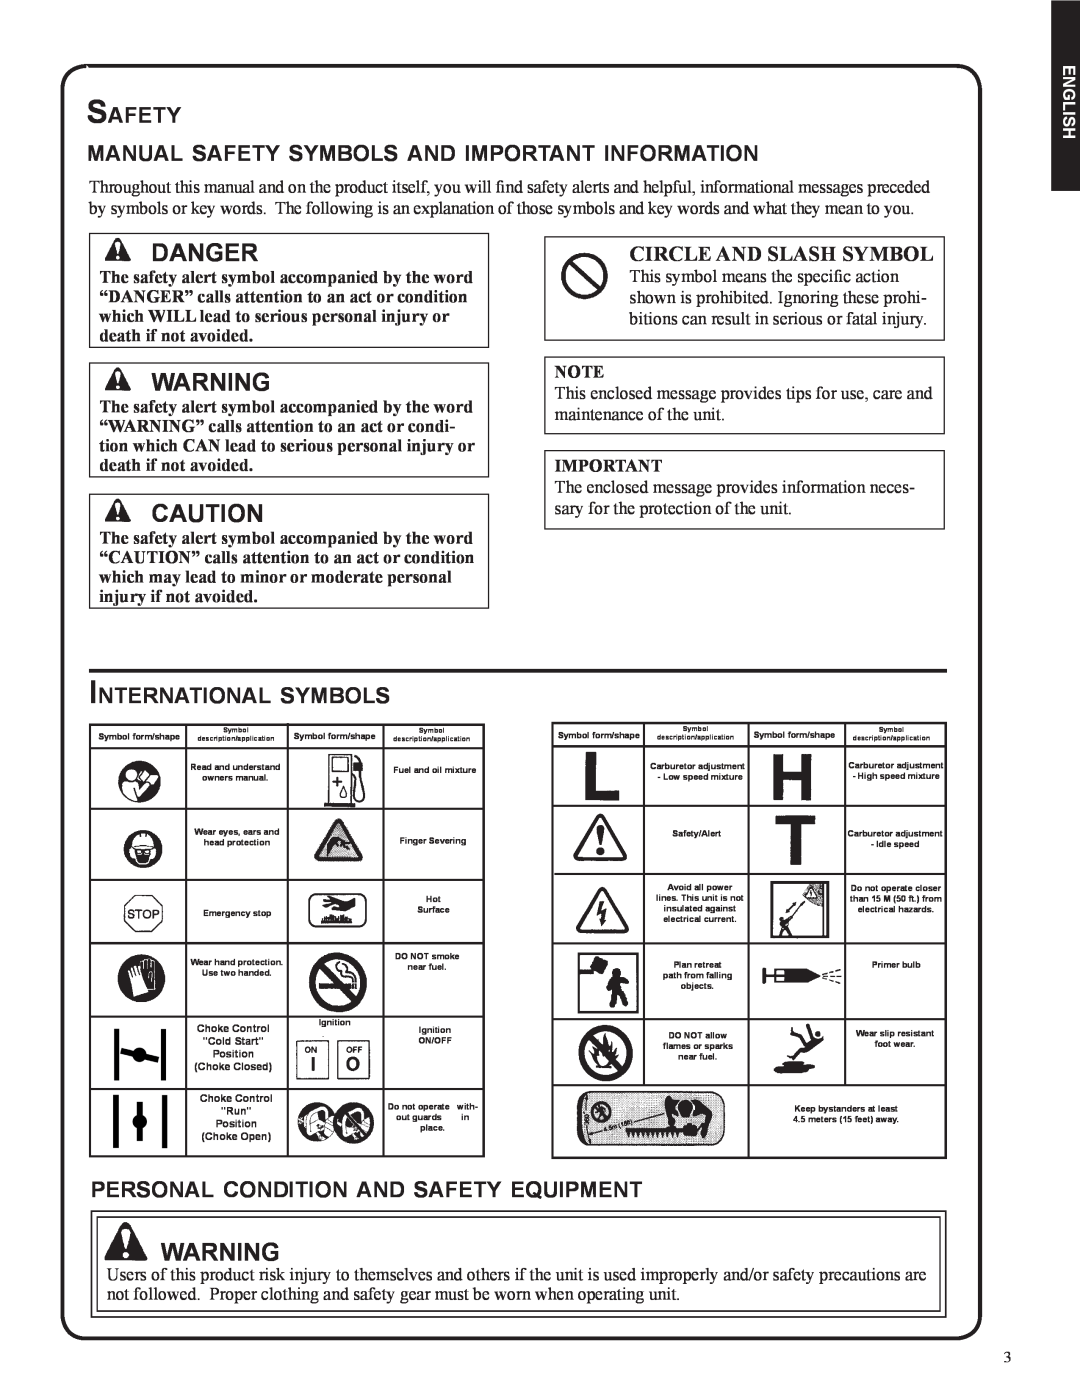 Shindaiwa 82053, DH212 Danger, Safety, manual safety symbols and important information, International symbols, English 